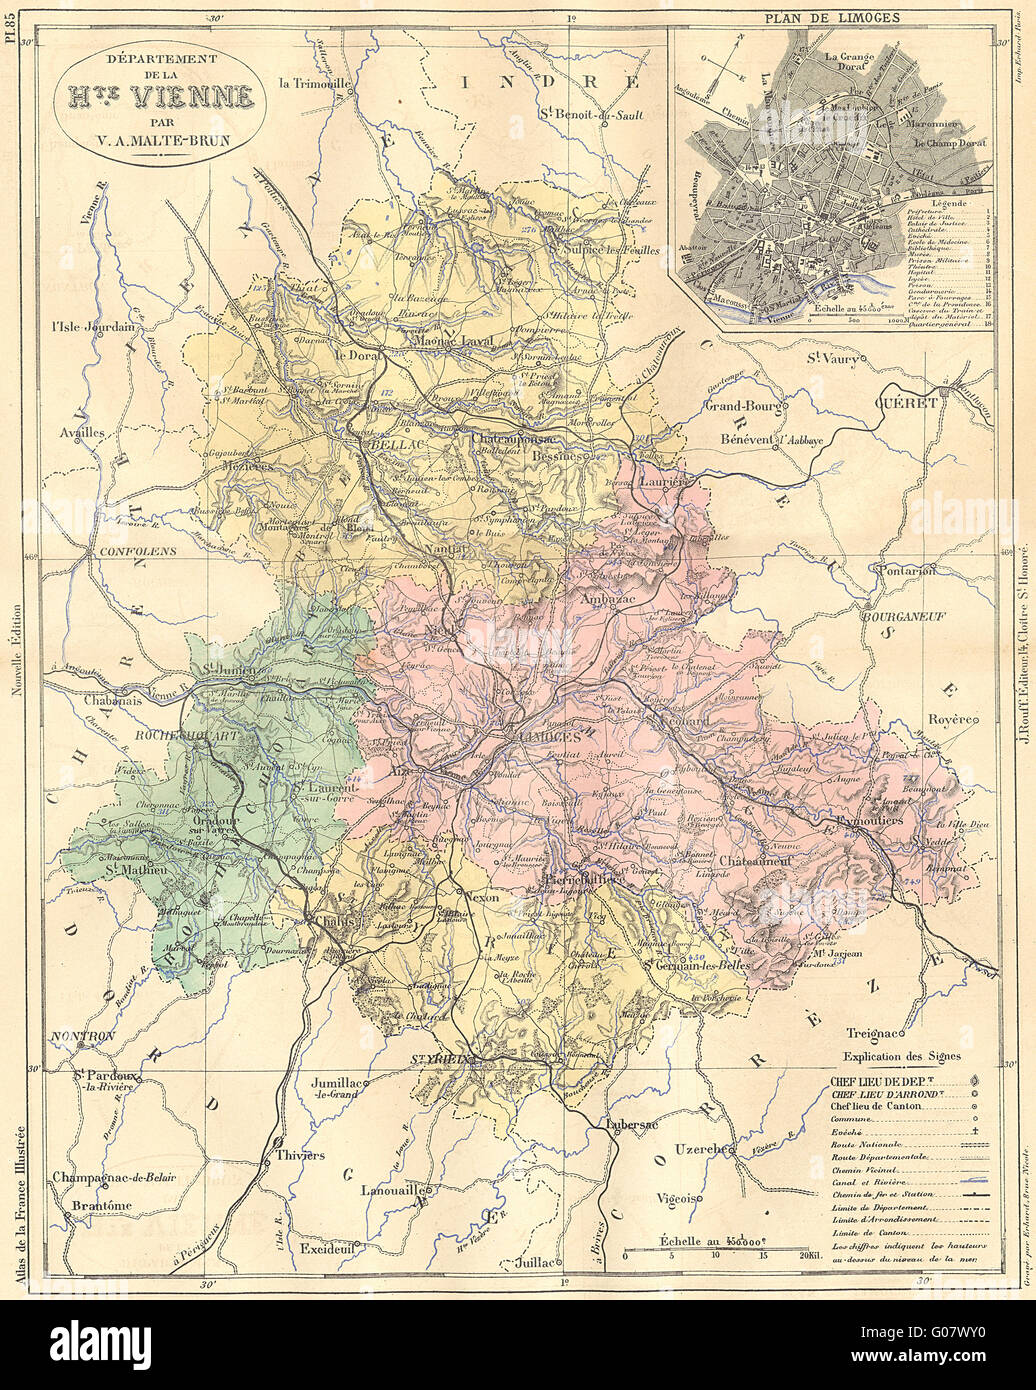 HAUTE-VIENNE: Departement de Hte; Limoges, 1884 Antike Landkarte planen Stockfoto